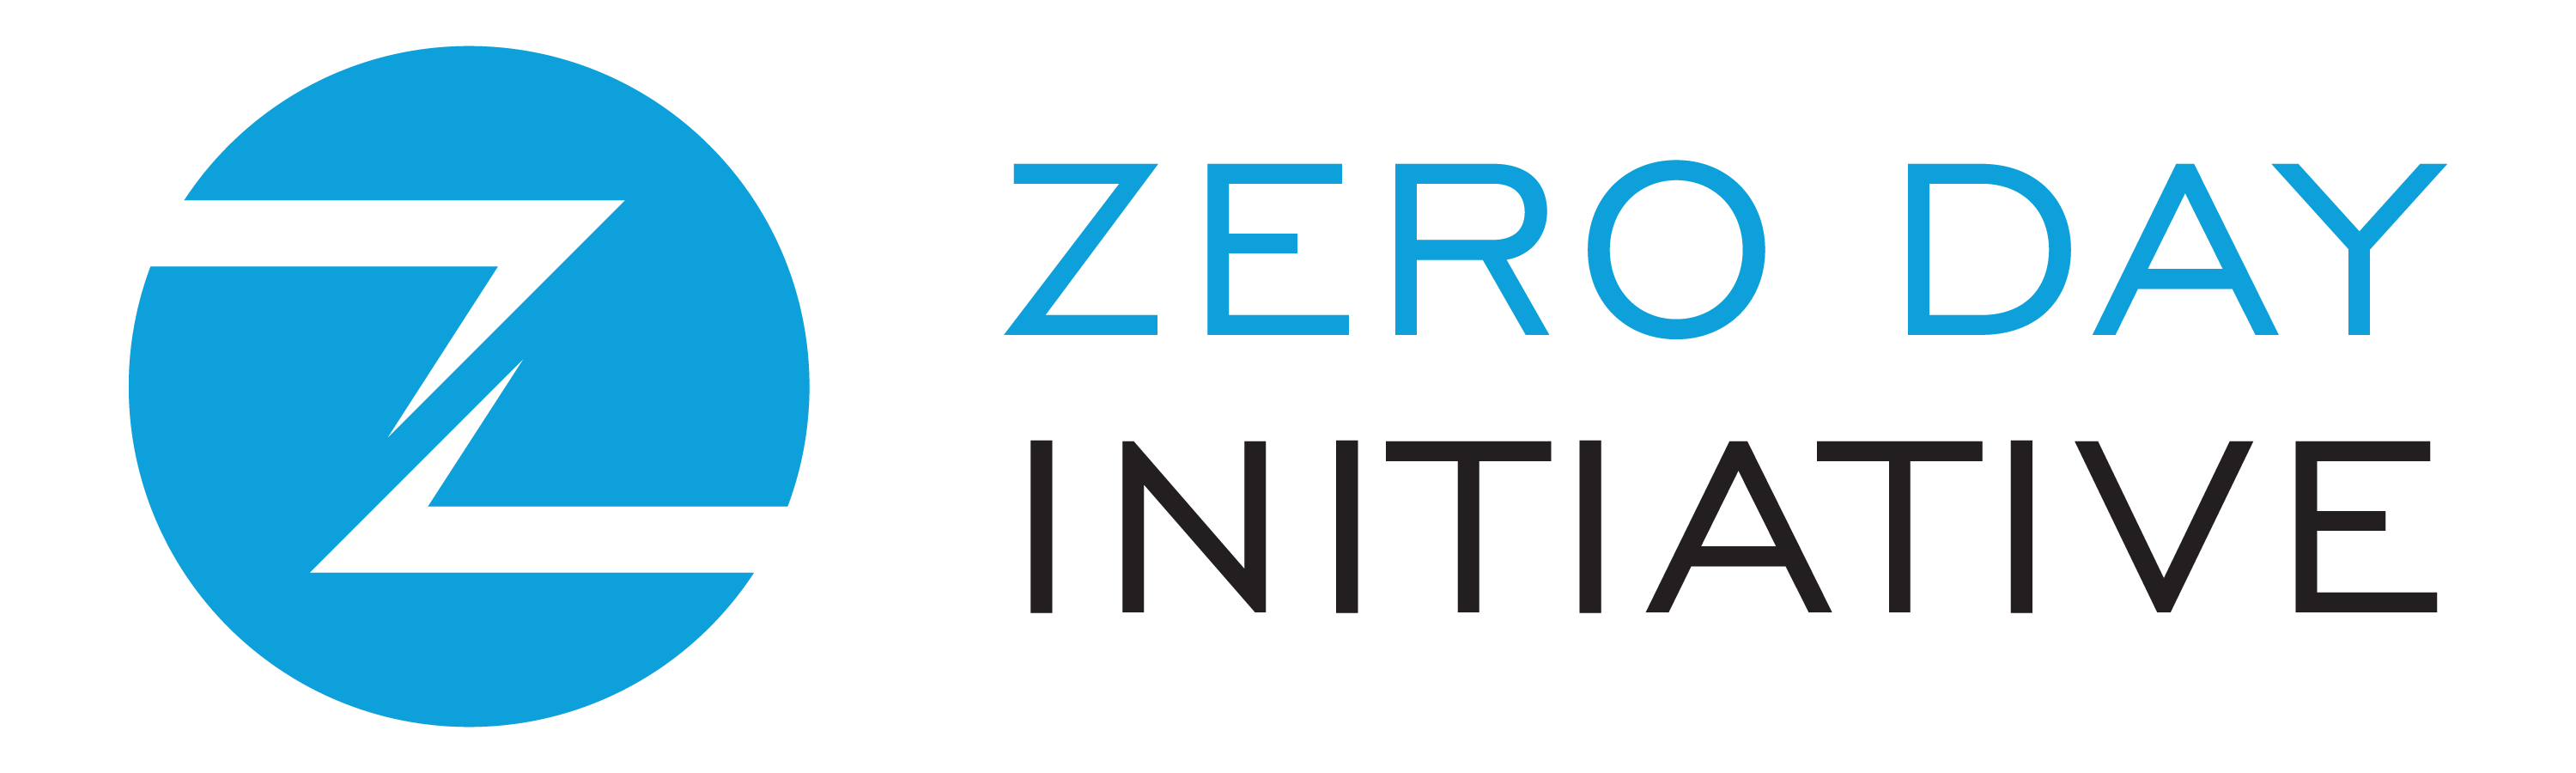 ZeroDay Initiative logo.png